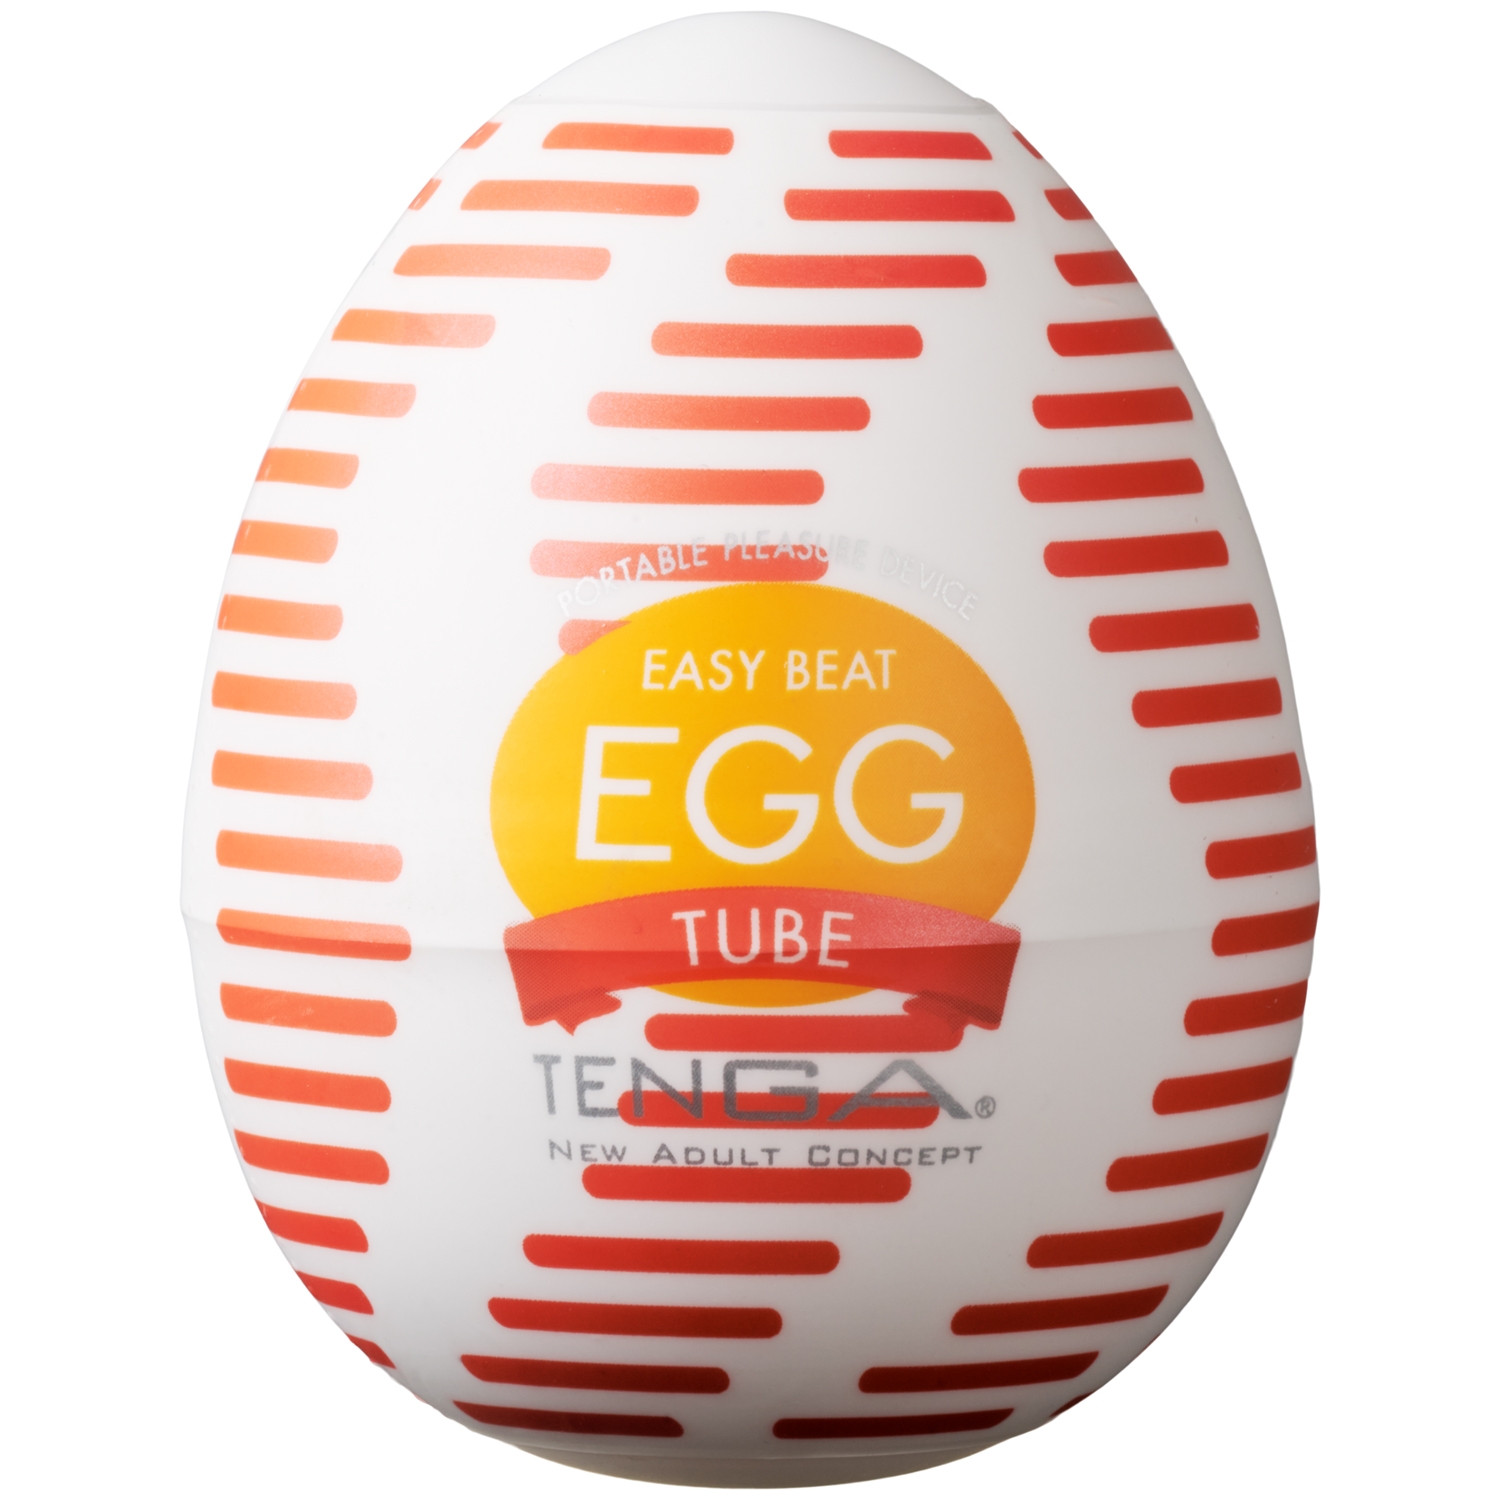 TENGA Egg Tube Masturbator - White